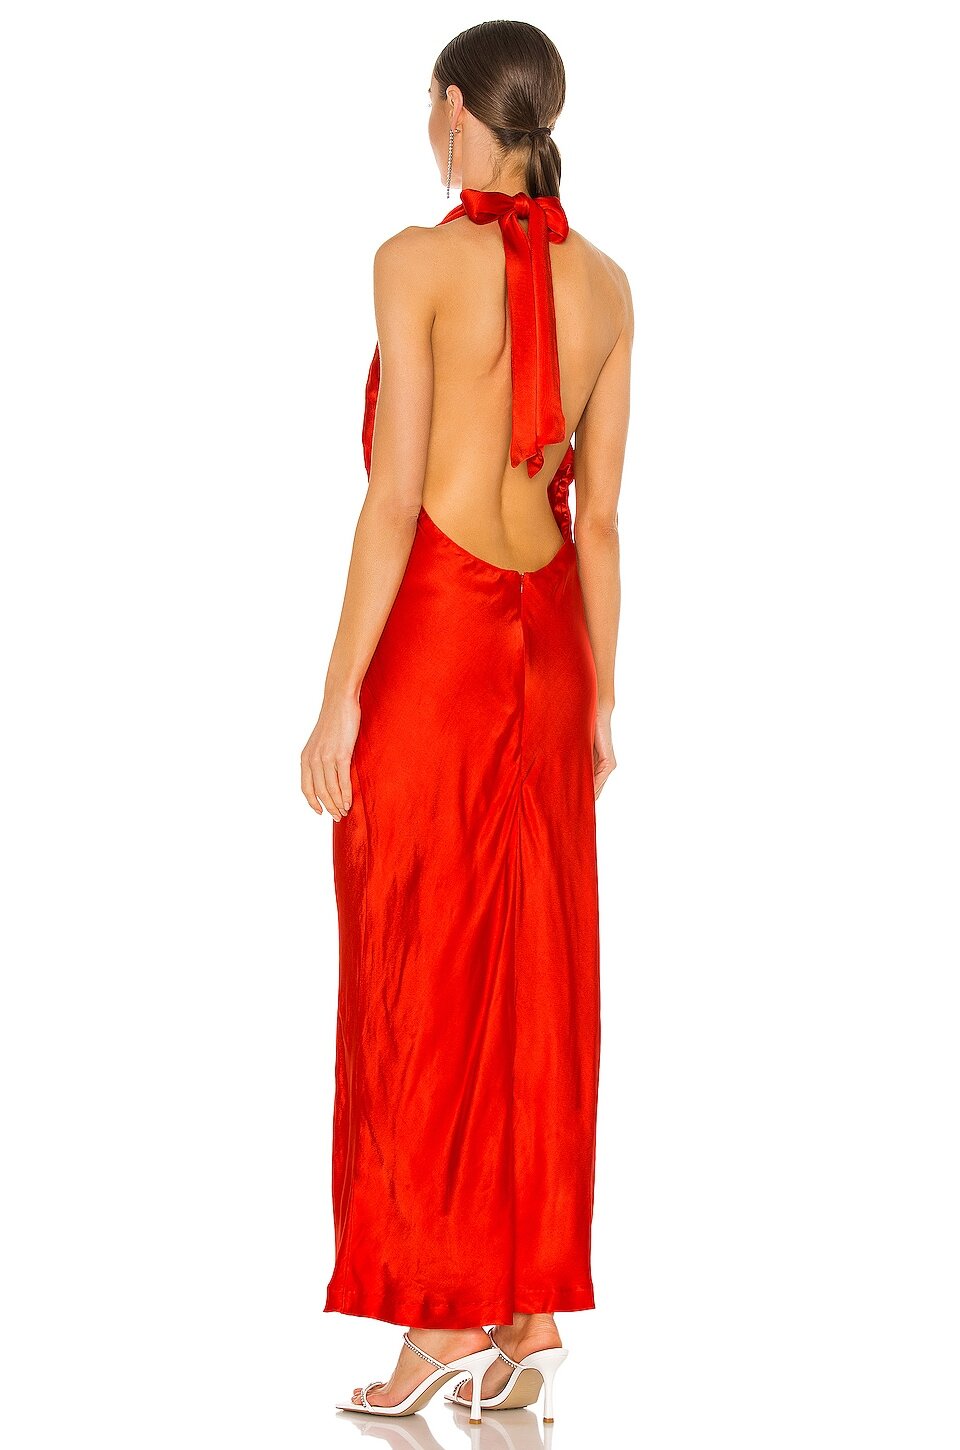 FINAL SALE* Bardot - Claudia Bias Cut Dress - Lipstick Red